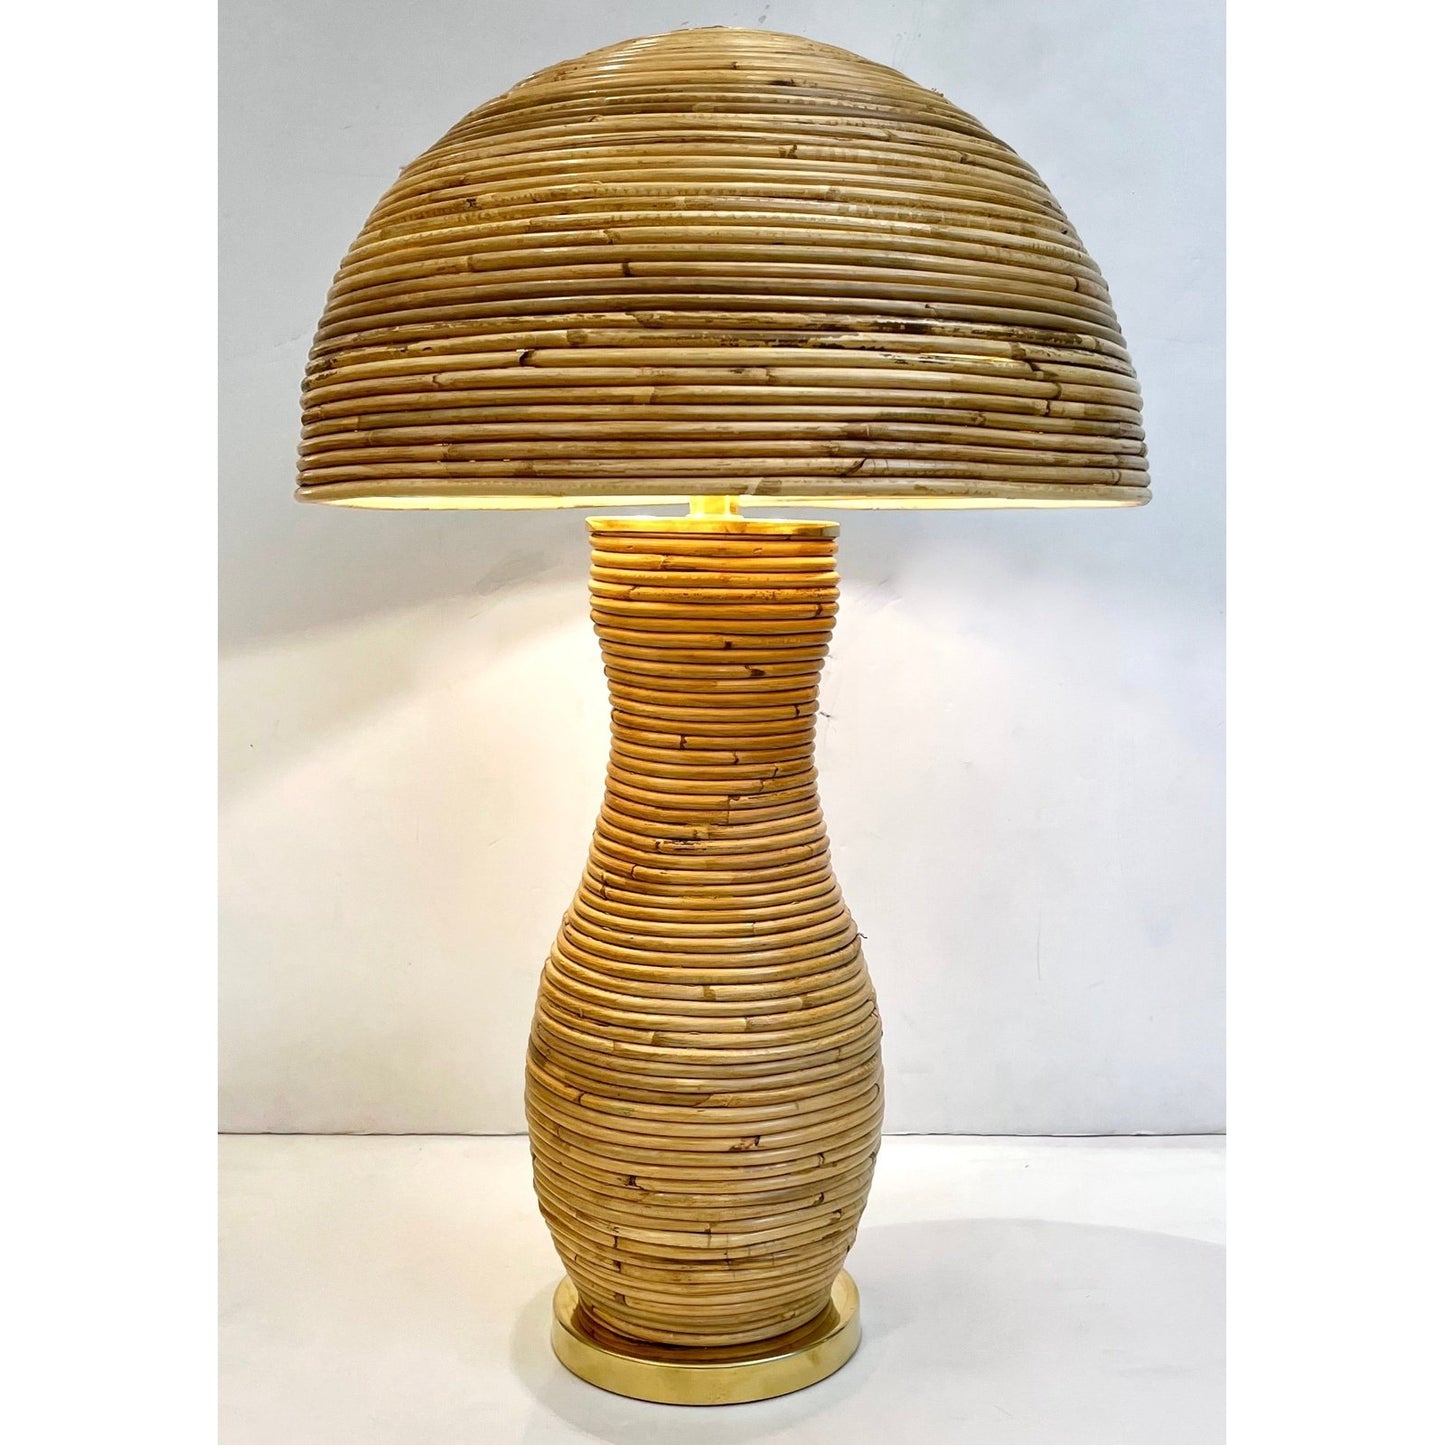 Italian Organic Modern Contemporary Brass & Rattan Mushroom Table/Floor Lamps